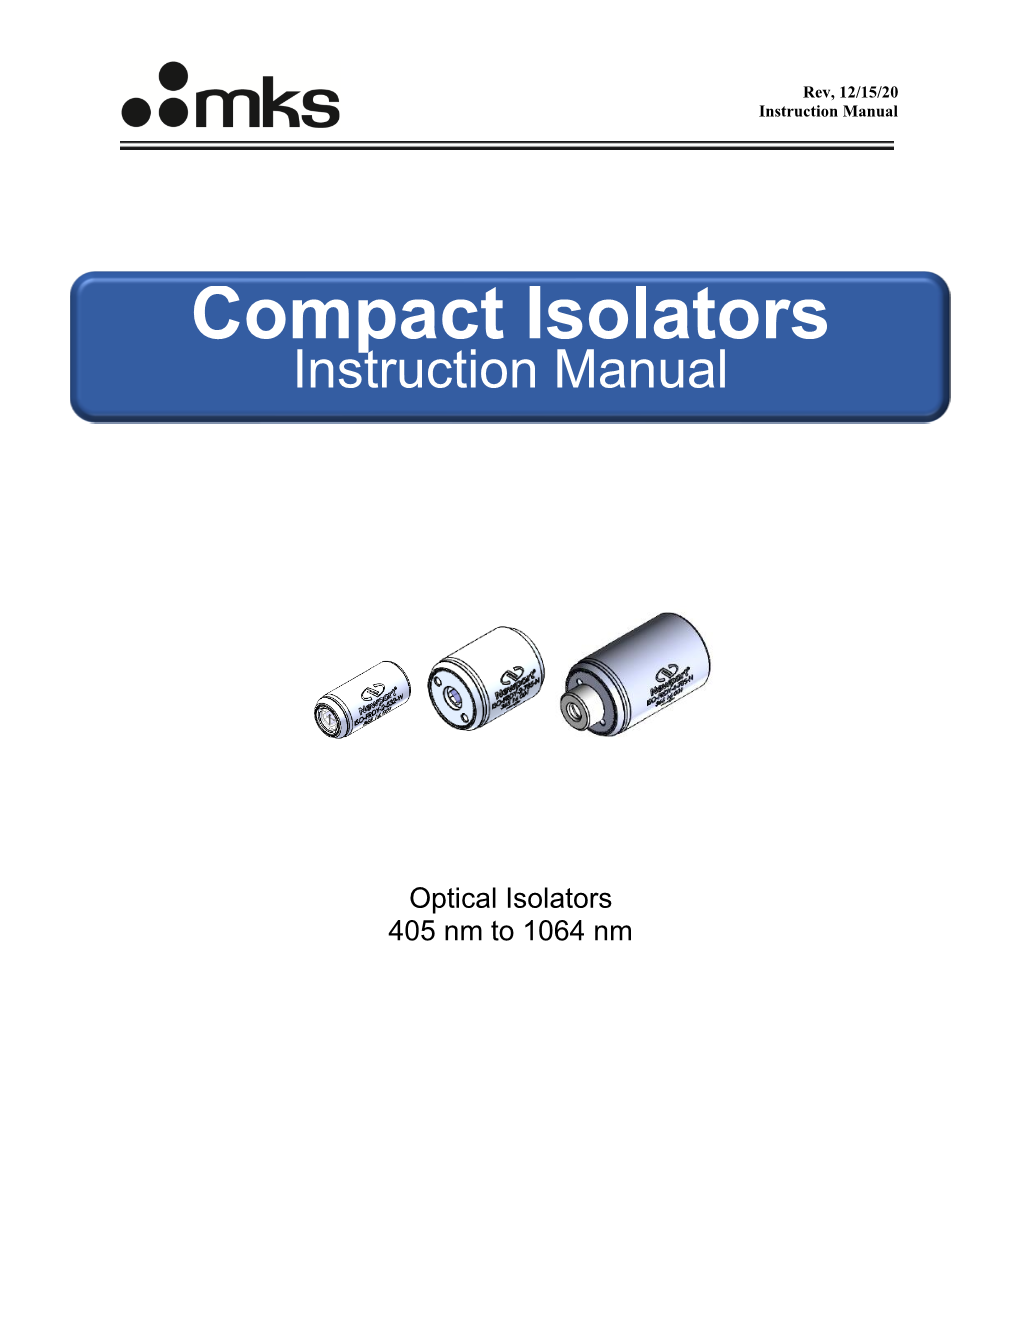 Compact Isolators